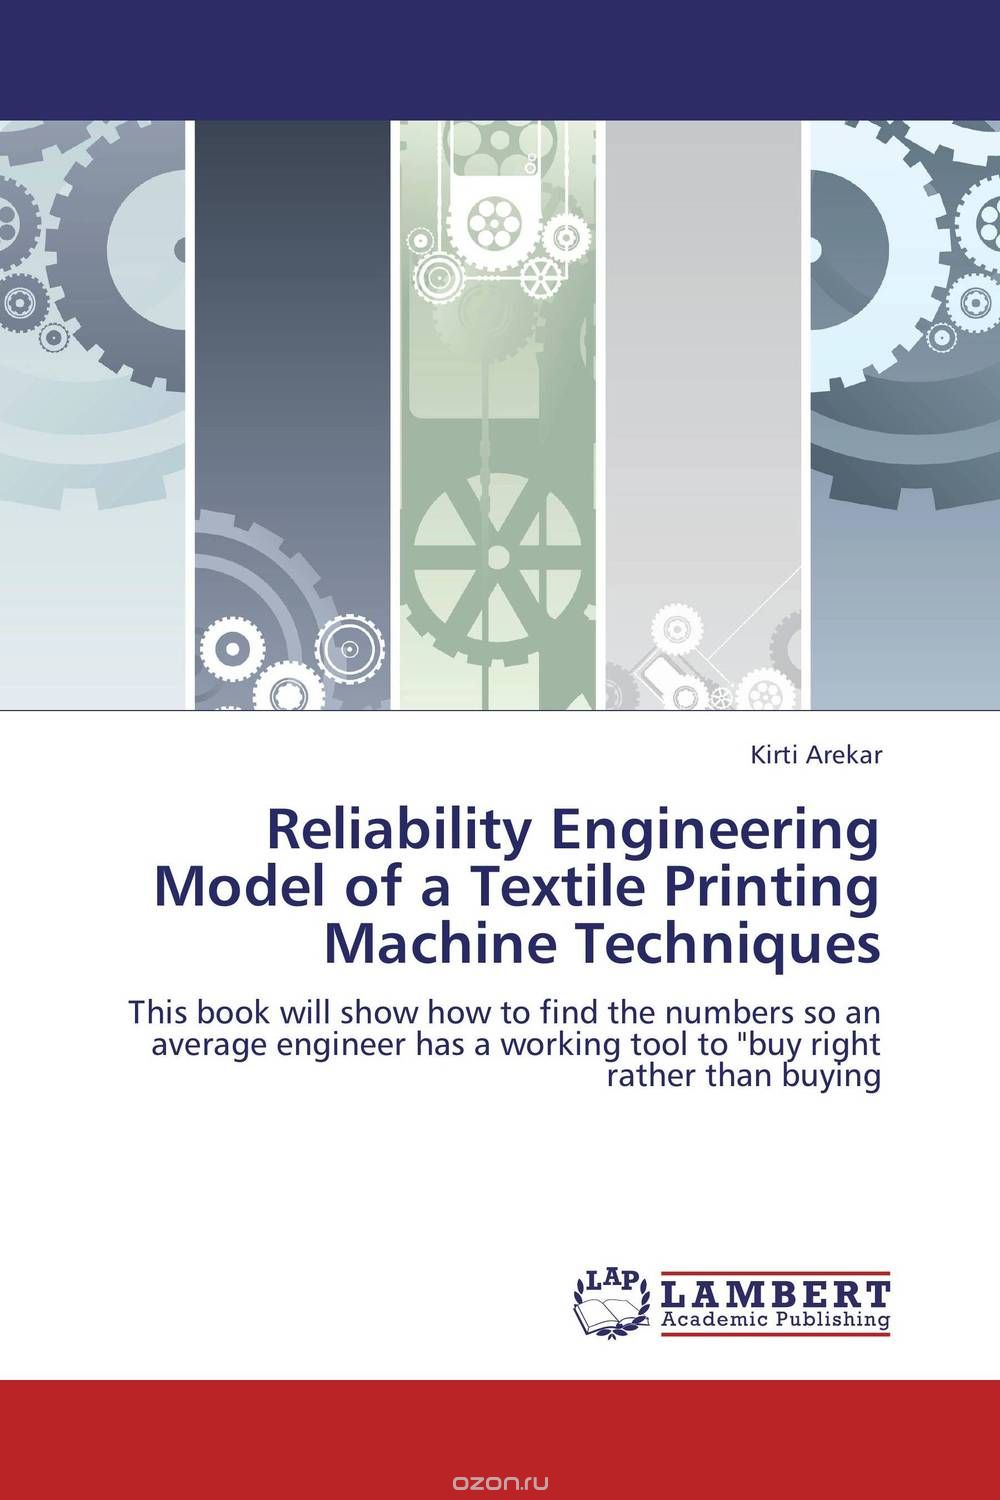 Скачать книгу "Reliability Engineering Model of a Textile Printing Machine Techniques"